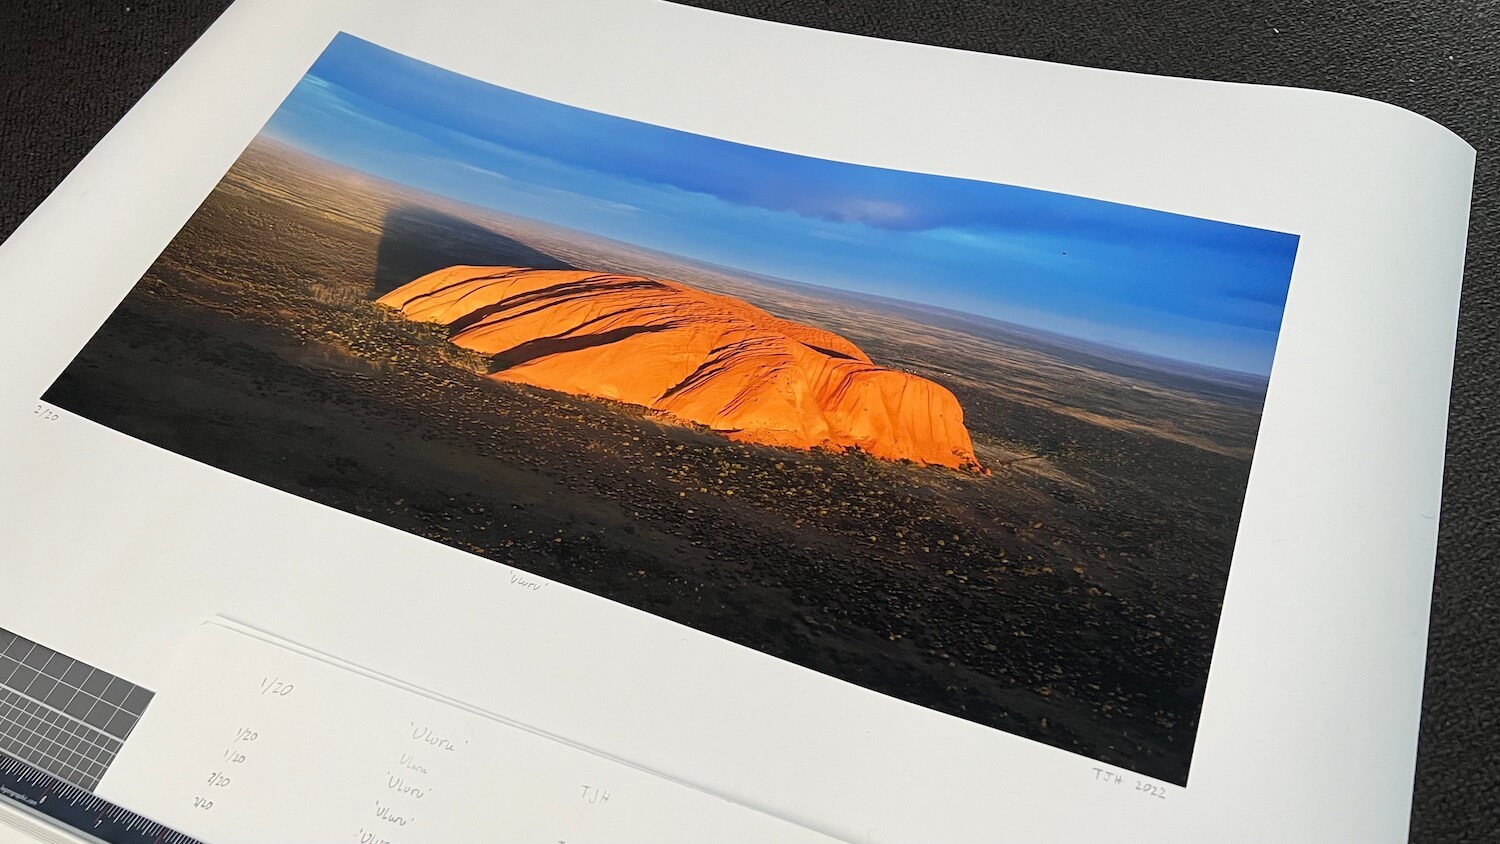 A picture of a photographic print of Uluru, Australia.